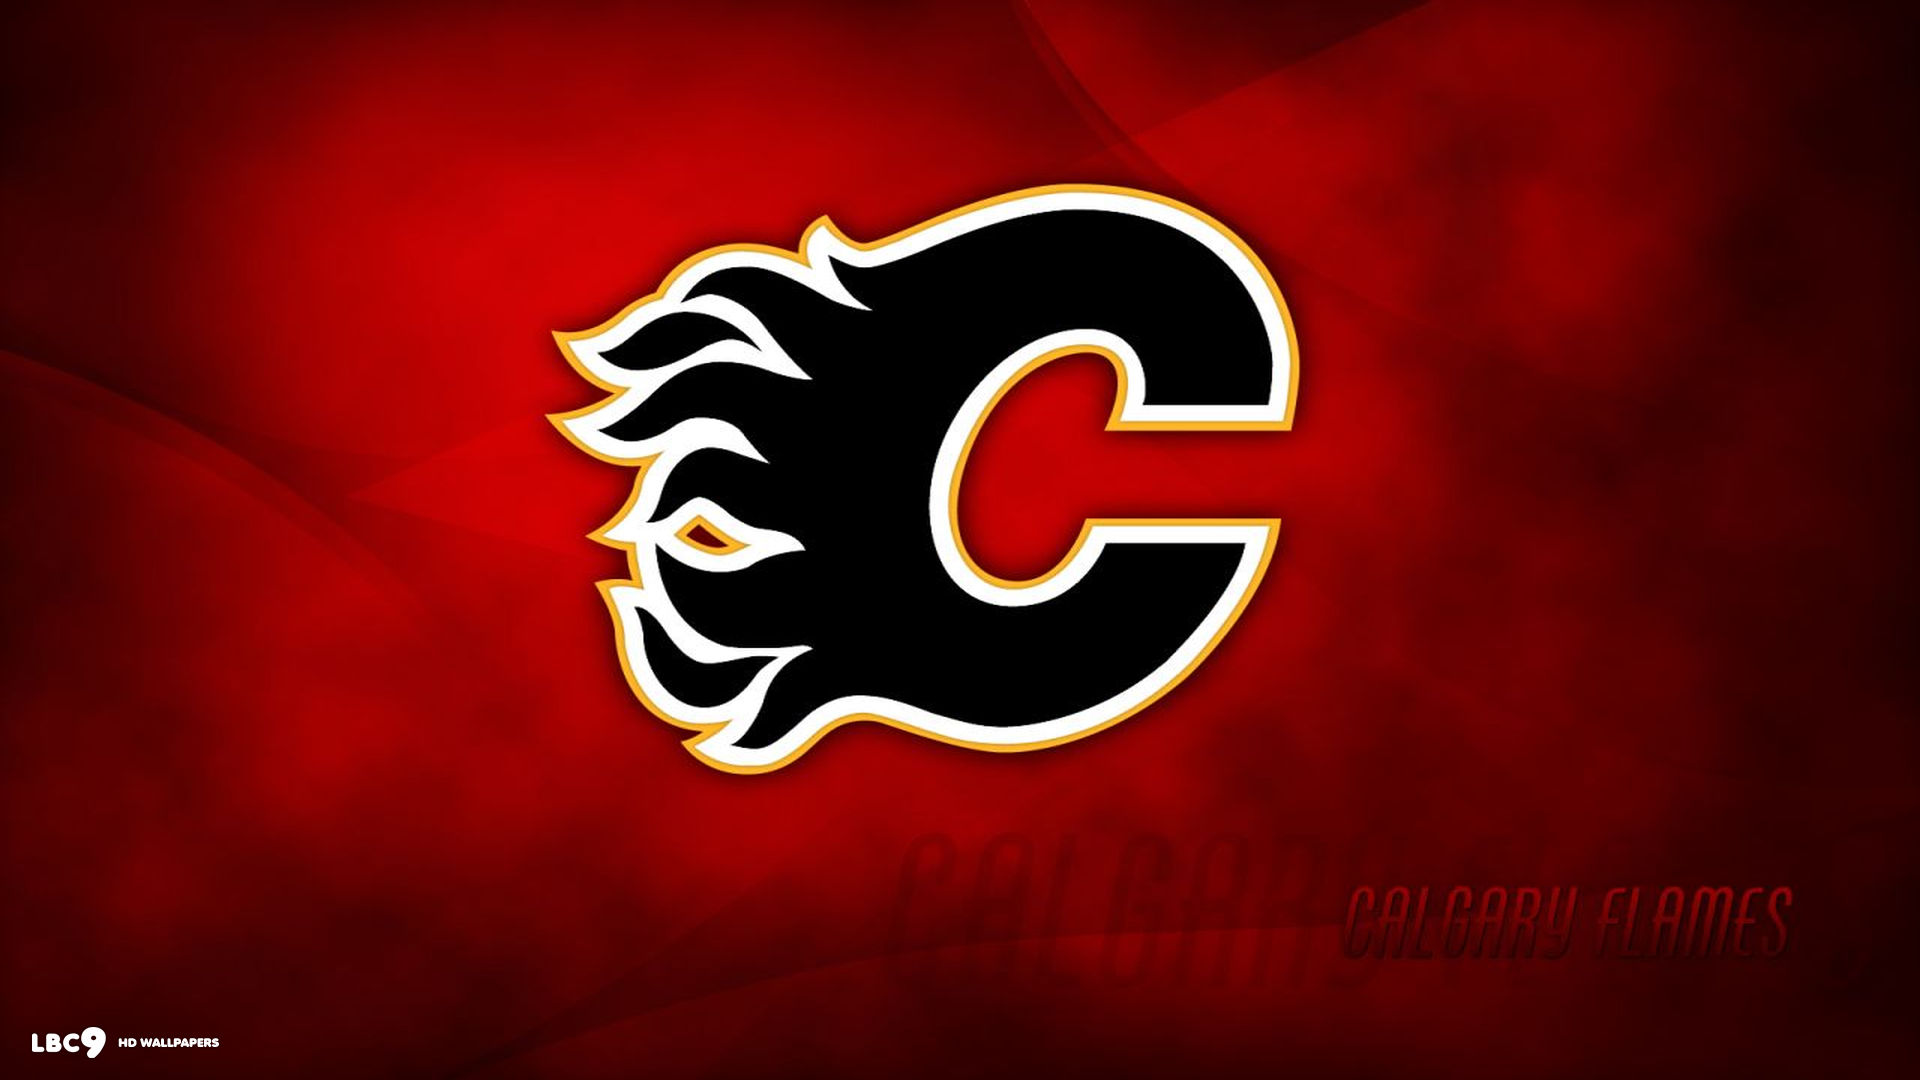 Calgary flames wallpaper 2 / 3 hockey teams hd backgrounds